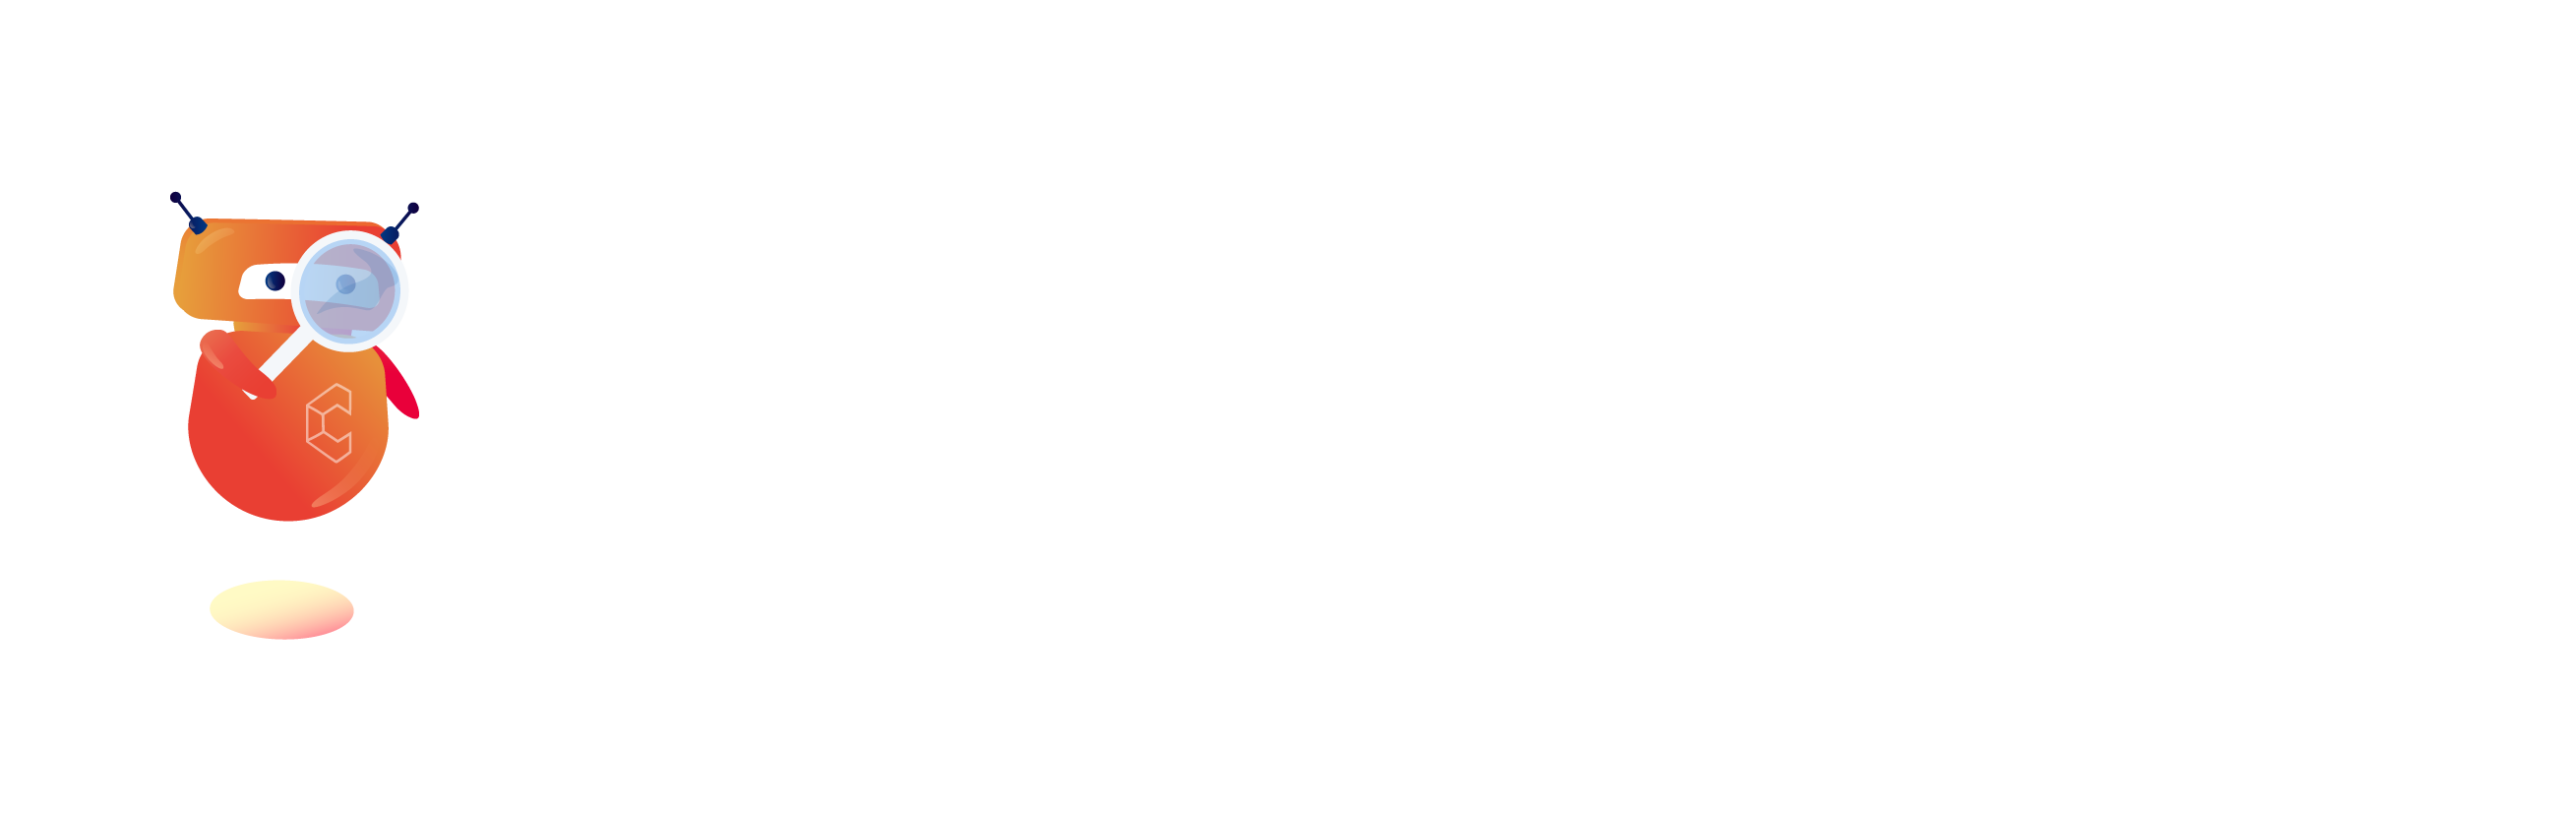 acychecker logo white